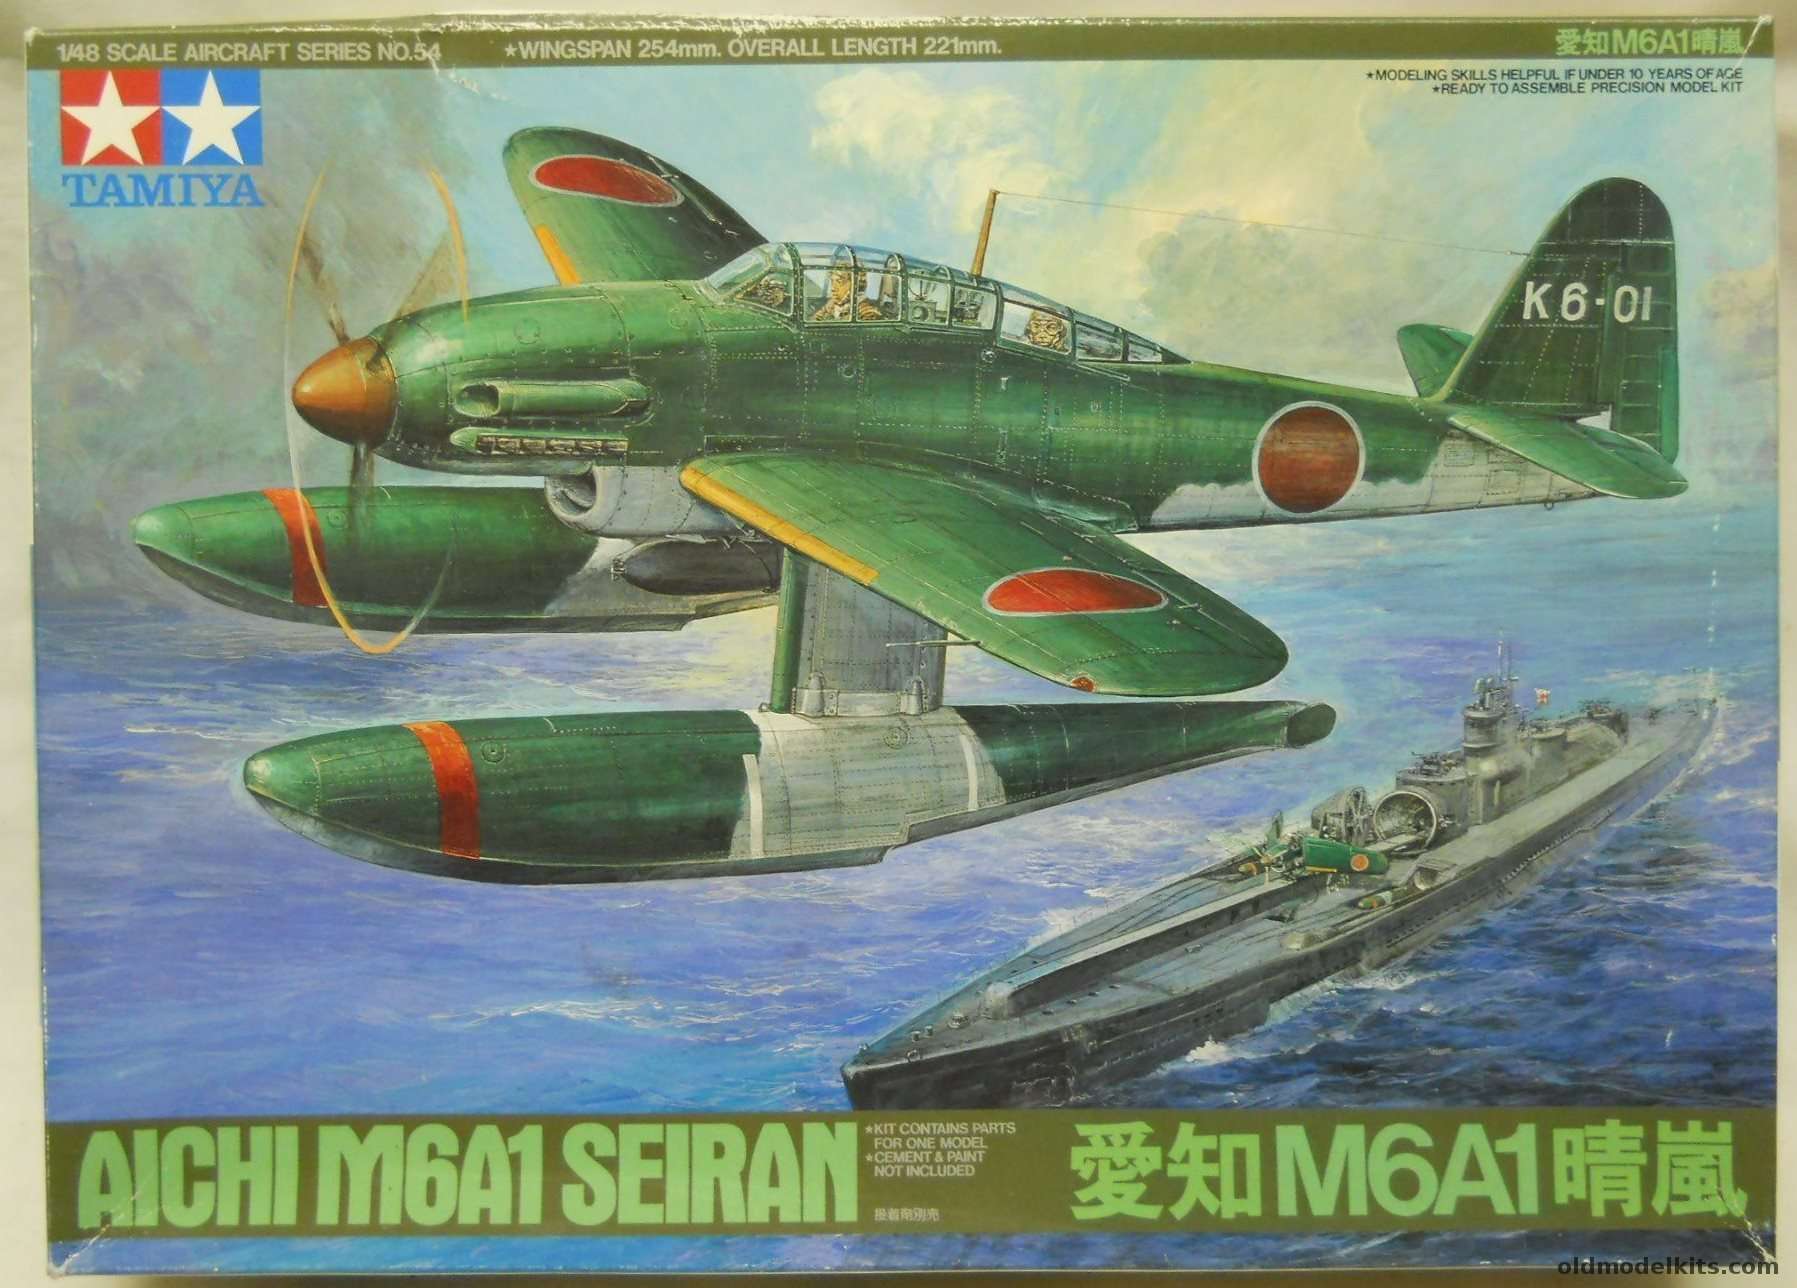 Tamiya 1/48 Aichi M6A1 Seiran, 61054-2200 plastic model kit